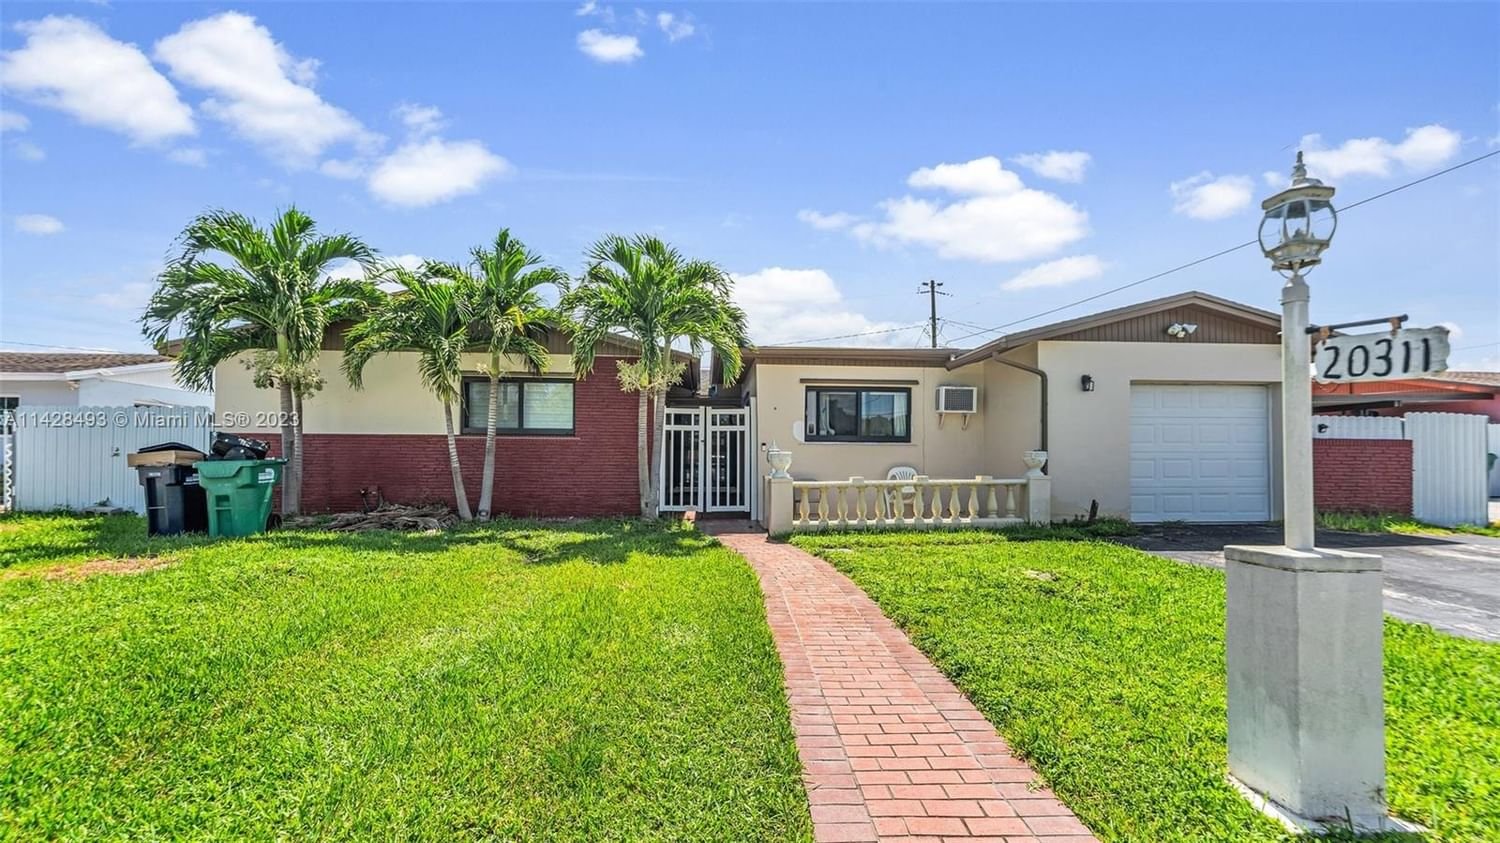 Real estate property located at 20311 116th Ave, Miami-Dade County, Miami, FL